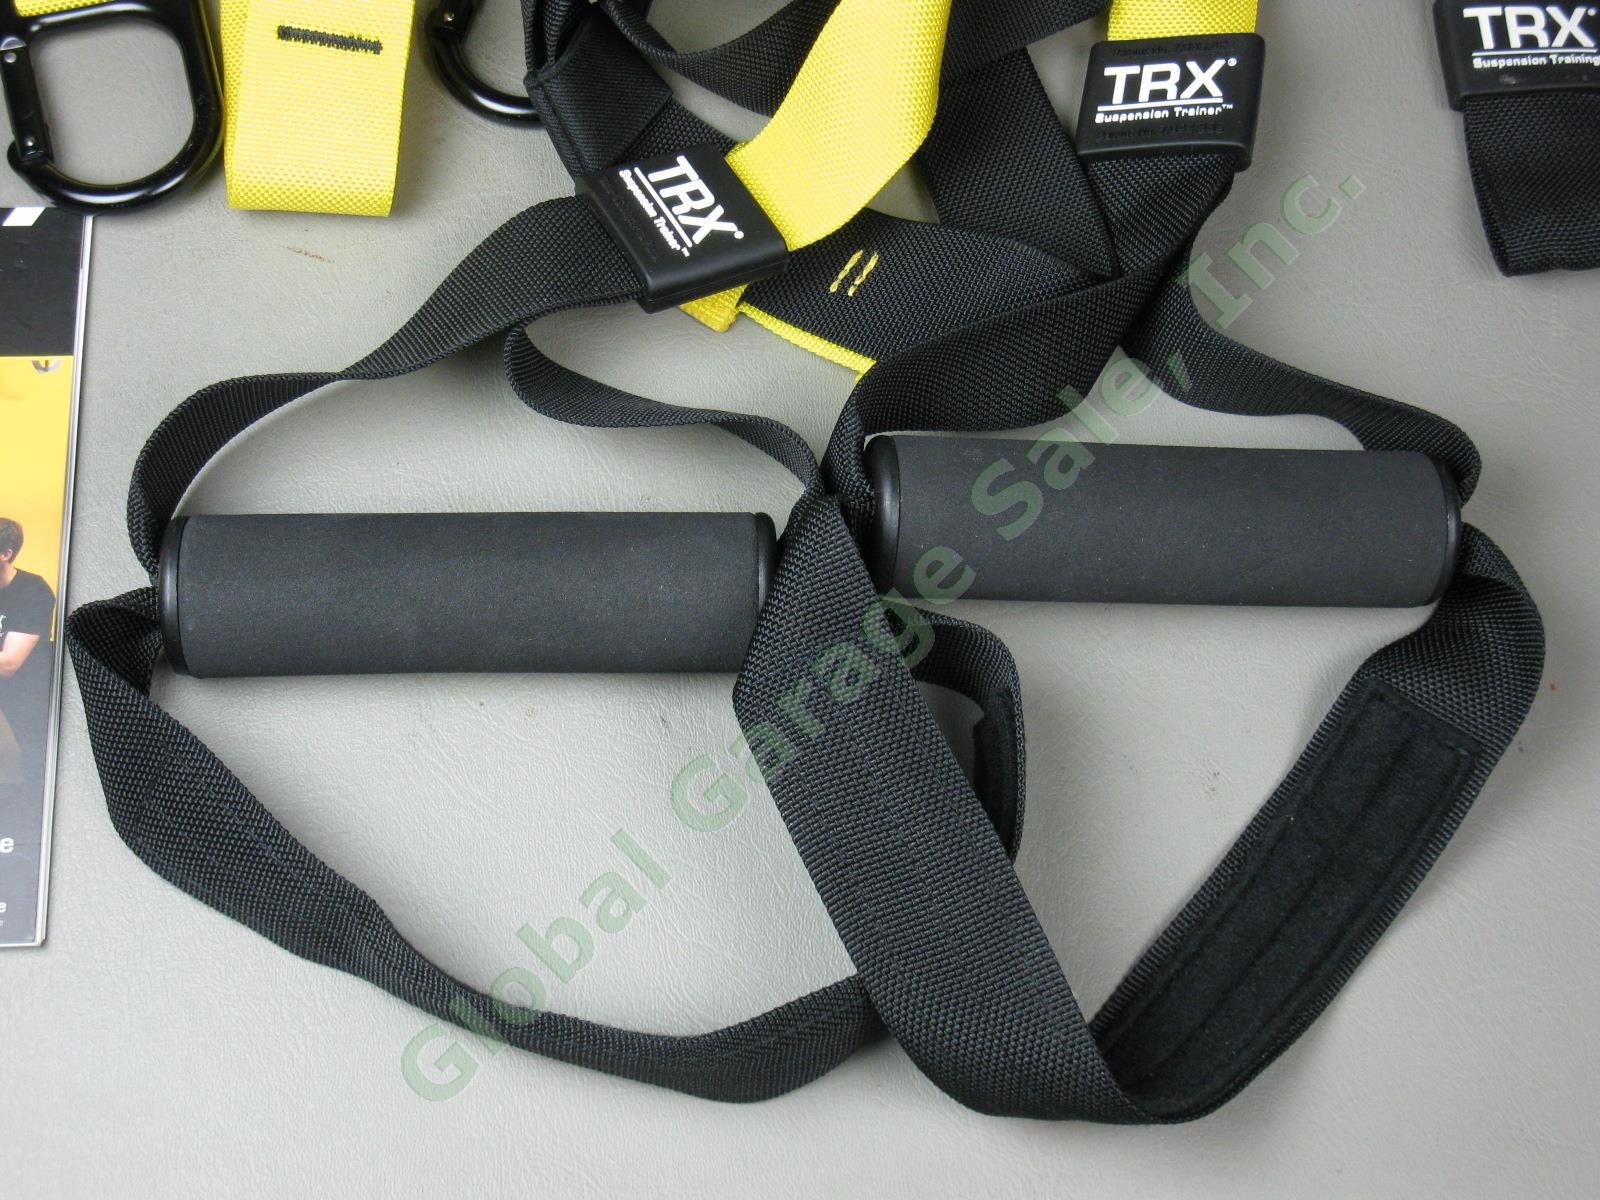 TRX Pro Pack Suspension Trainer W/ DVDs + Door Anchor Mint Condition No Reserve! 2